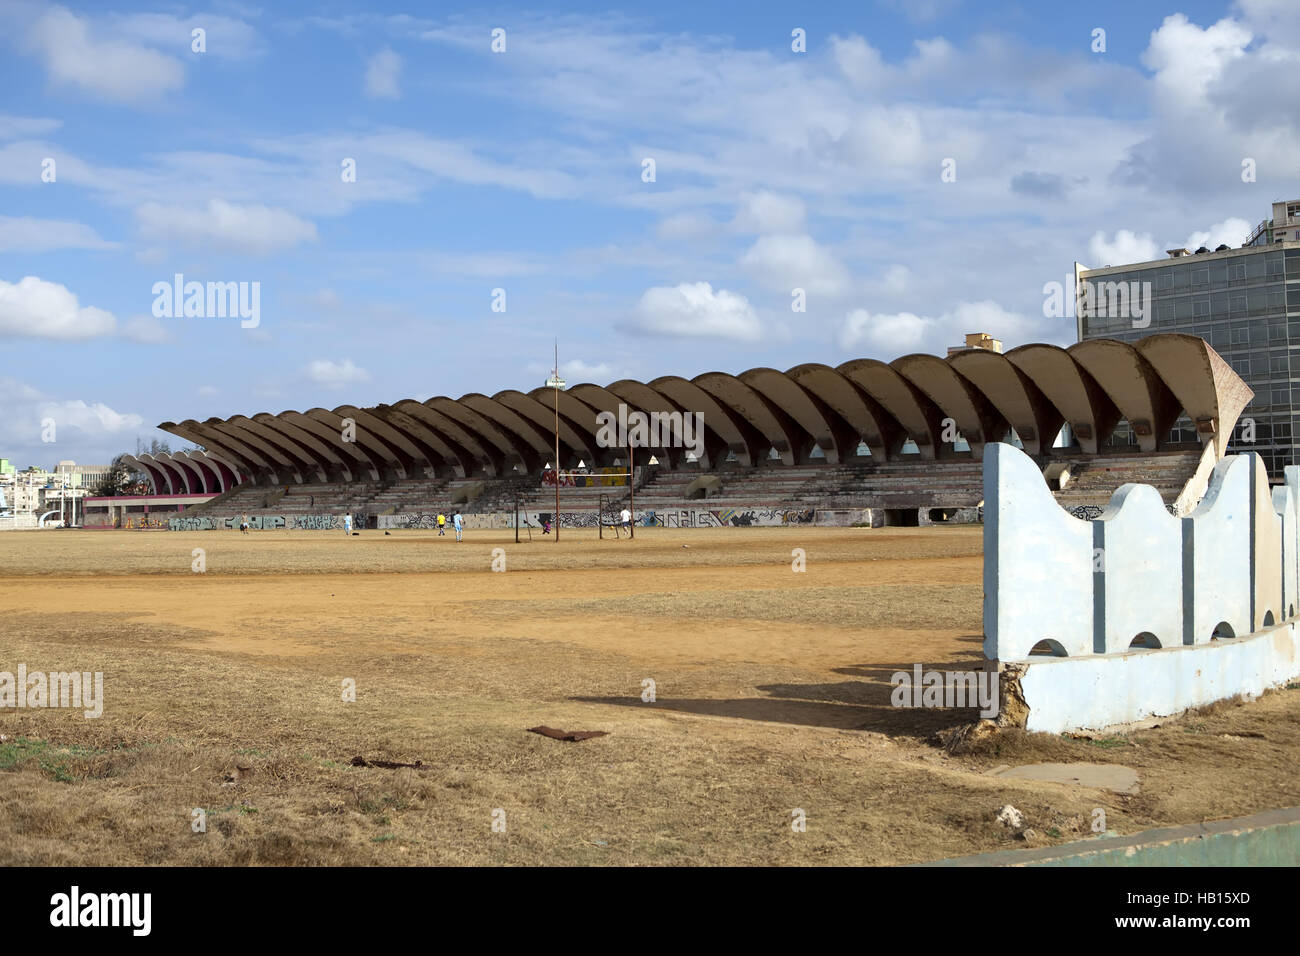 Cuba. Havana. City stadium. Stock Photo